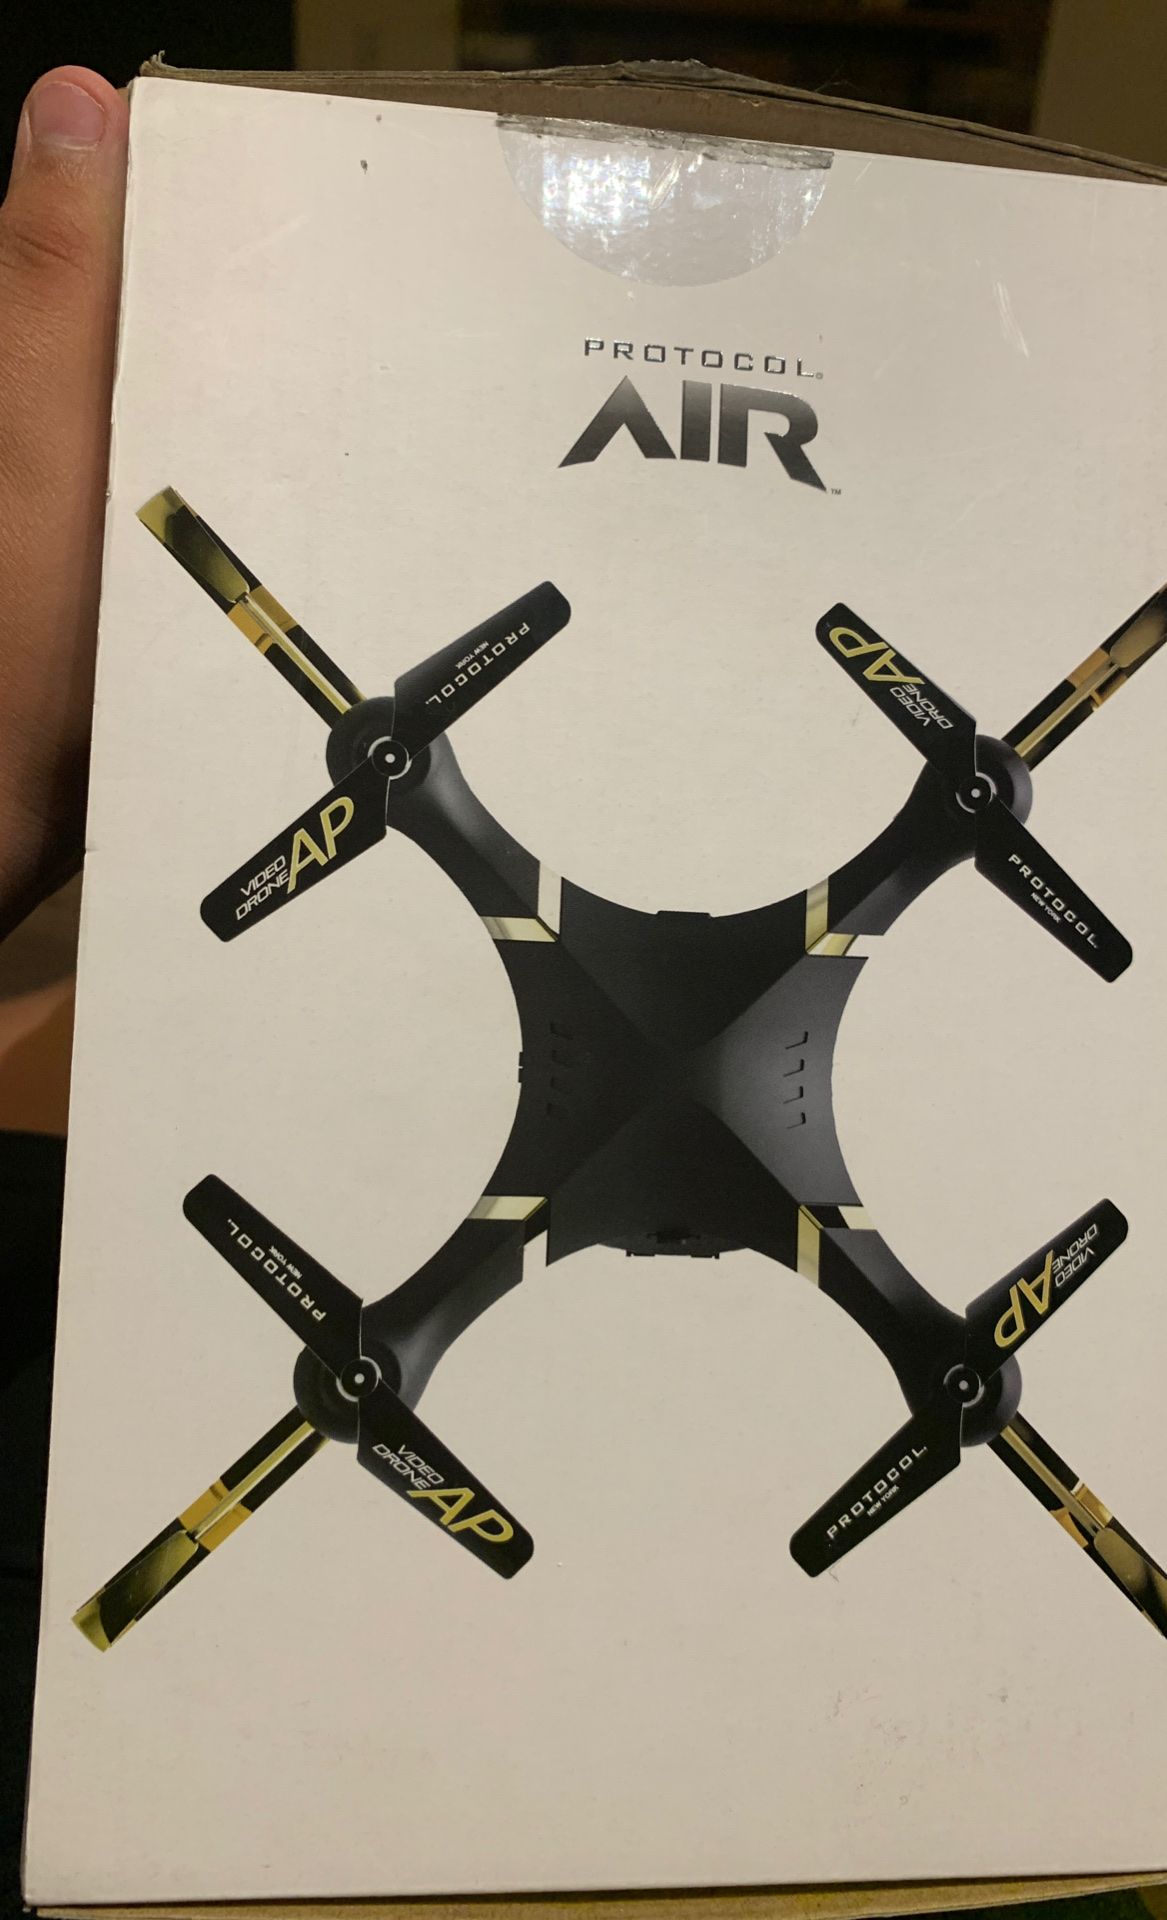 Protocol Air drone